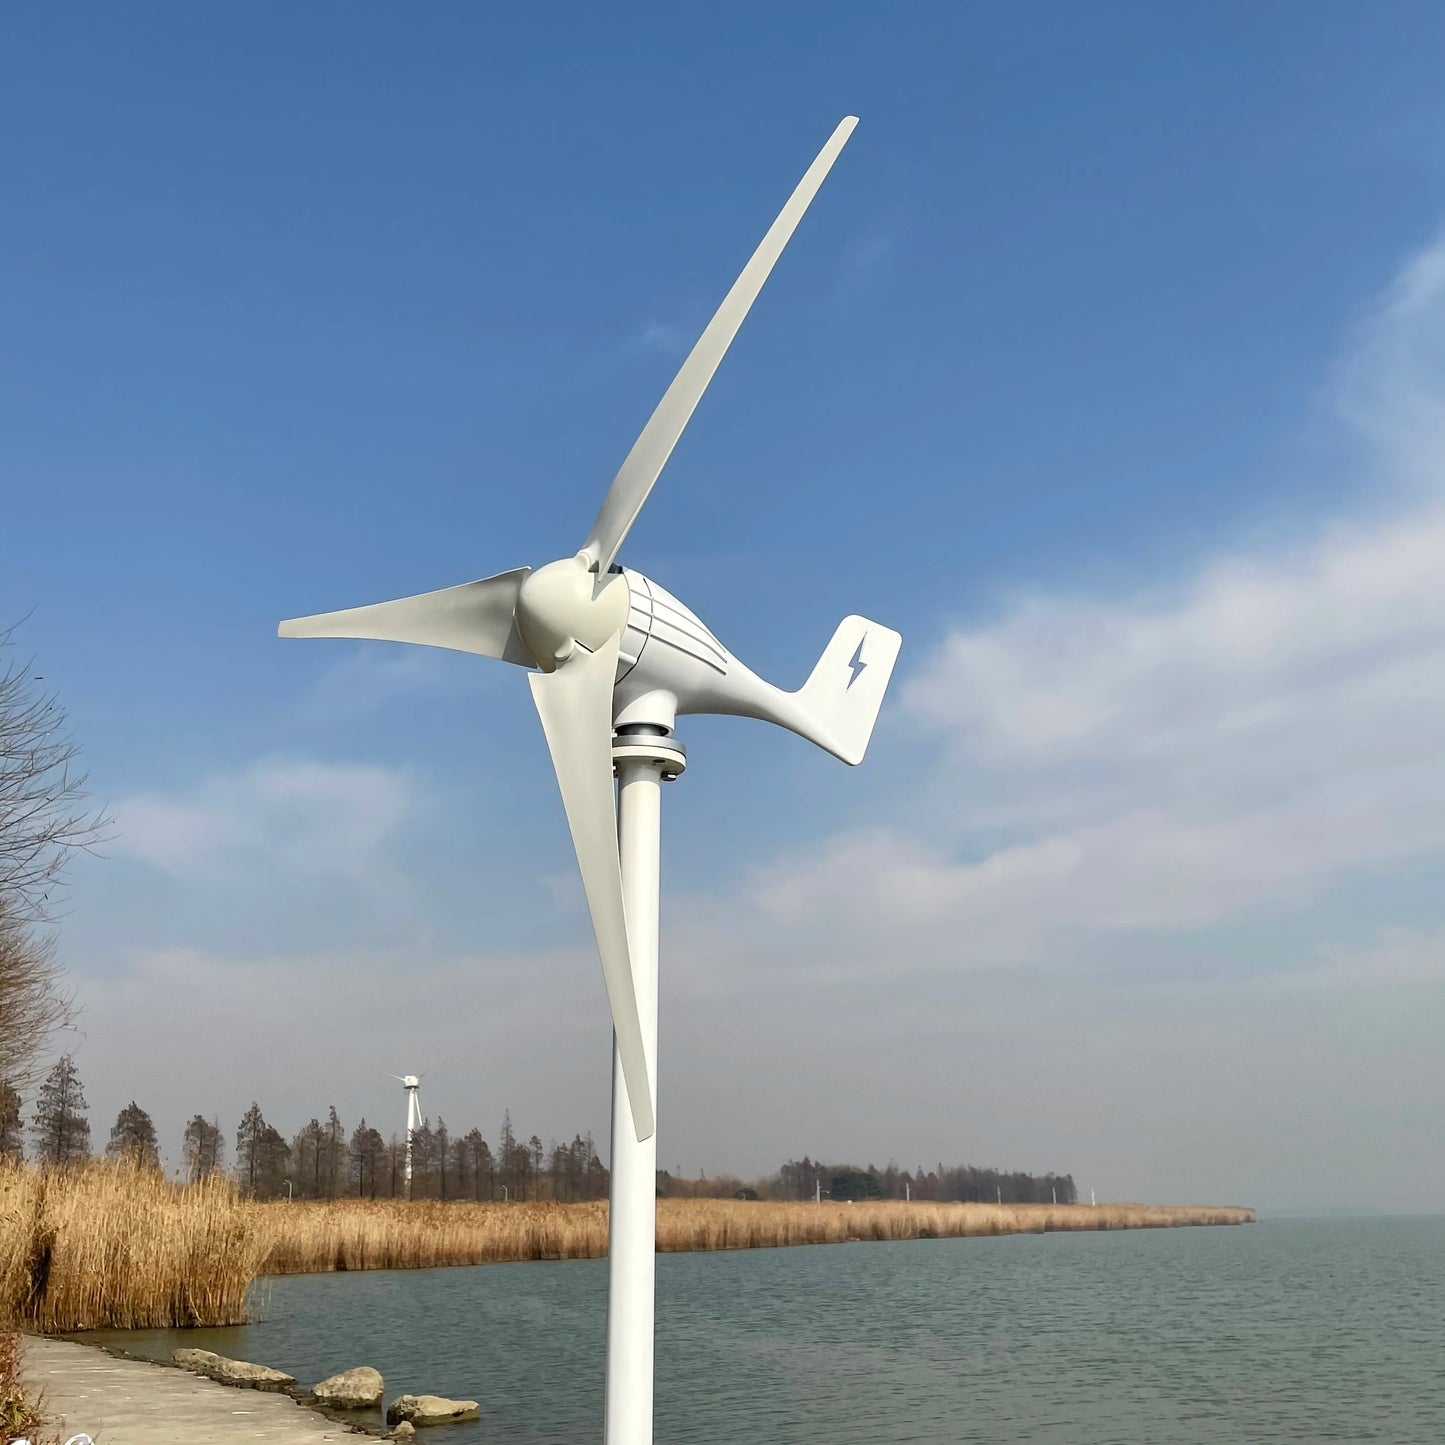 FLTXNY Hot Sale Free Energy 600W 800W 3 5 Blades Windmill 12V 24V Wind Power Small Wind Turbine Generator